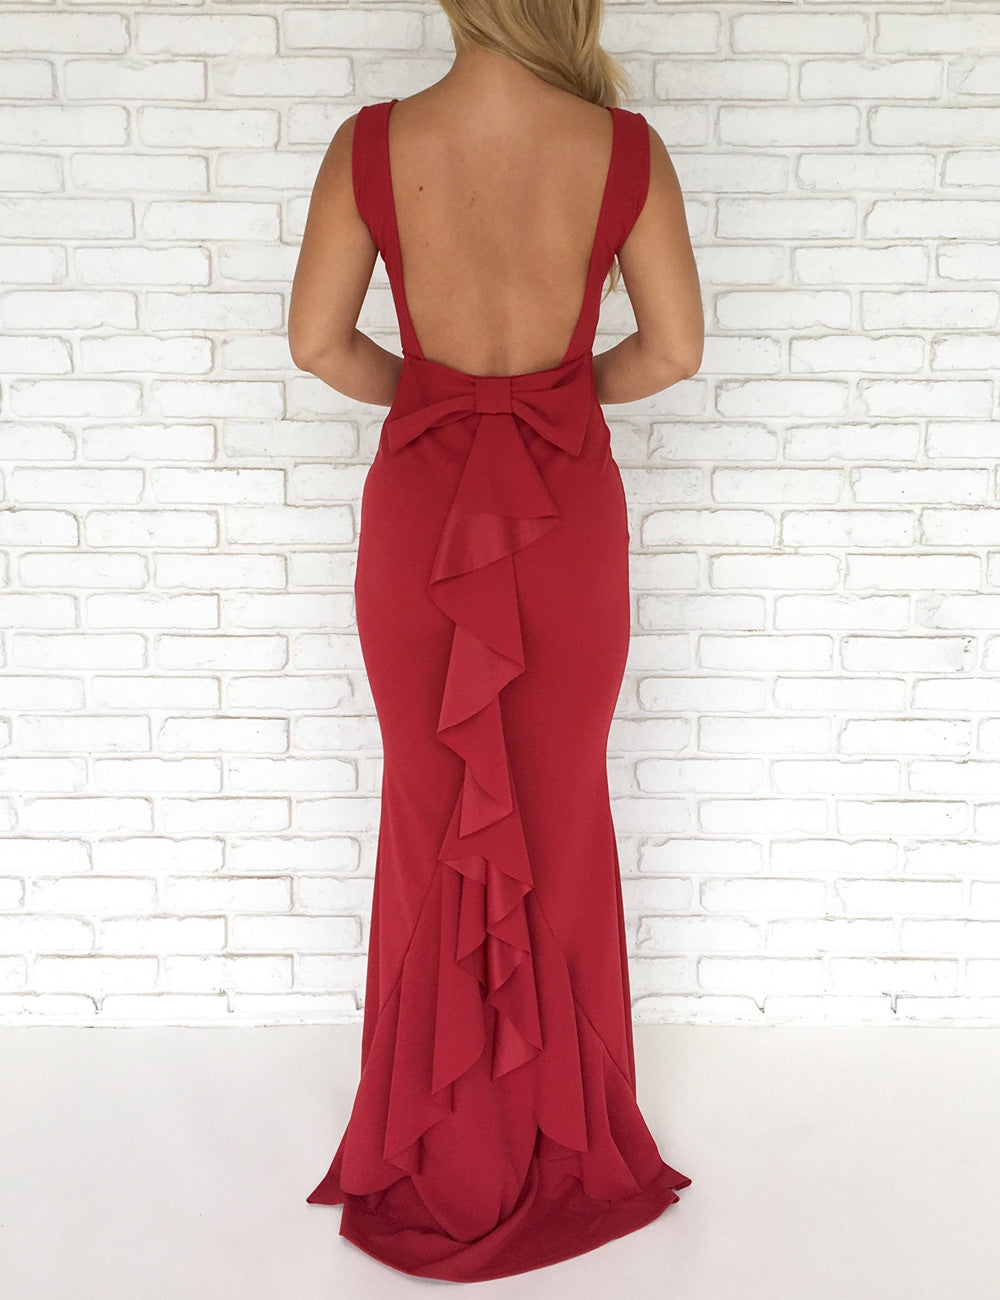 red backless dress uk